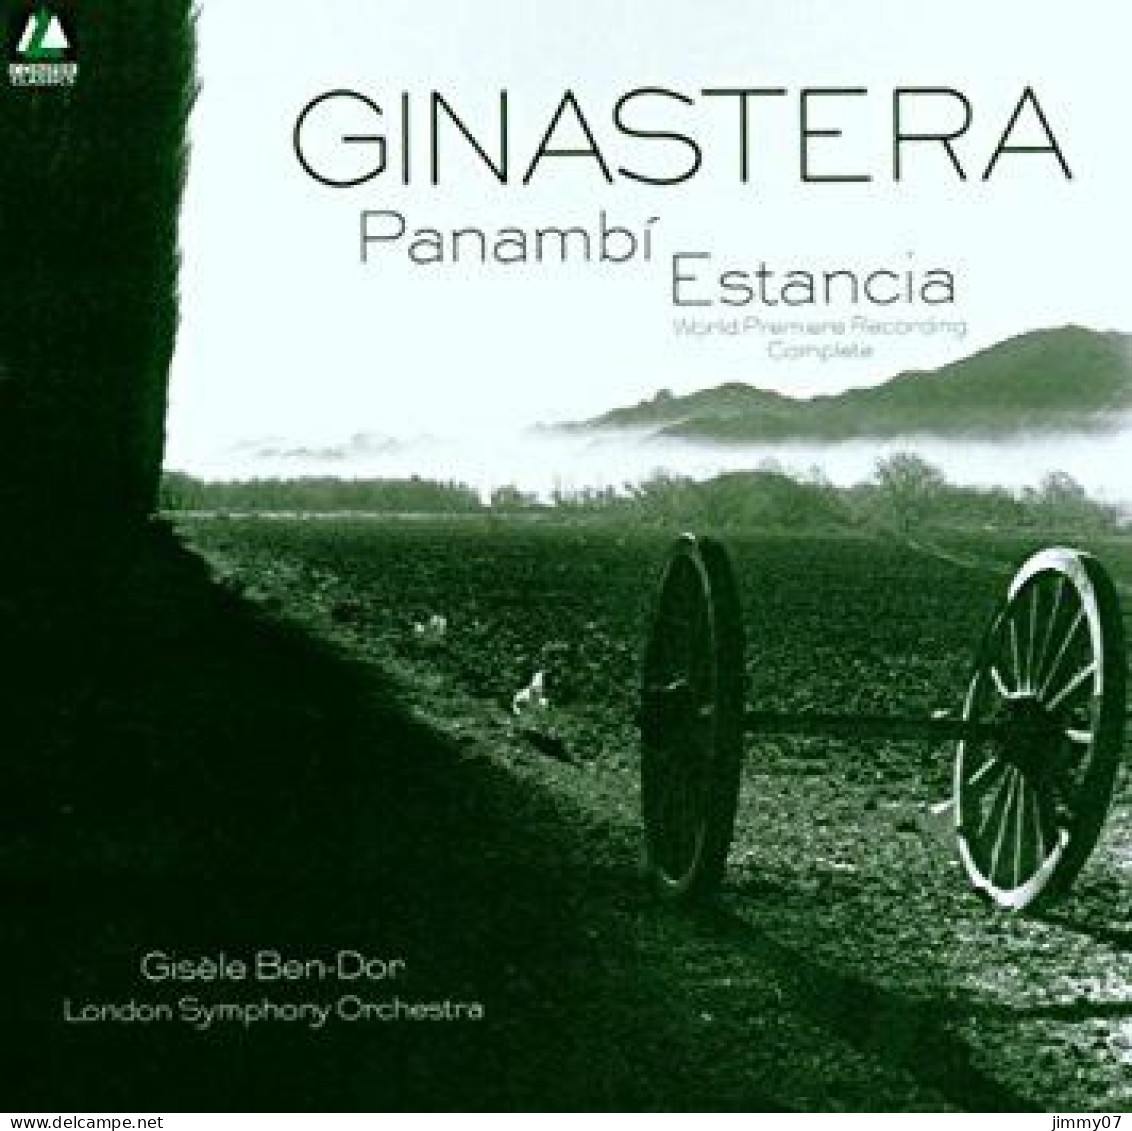 Gisèle Ben-Dor, London Symphony Orchestra, Alberto Ginastera - Panambí - Estancia (CD, Album) - Classical